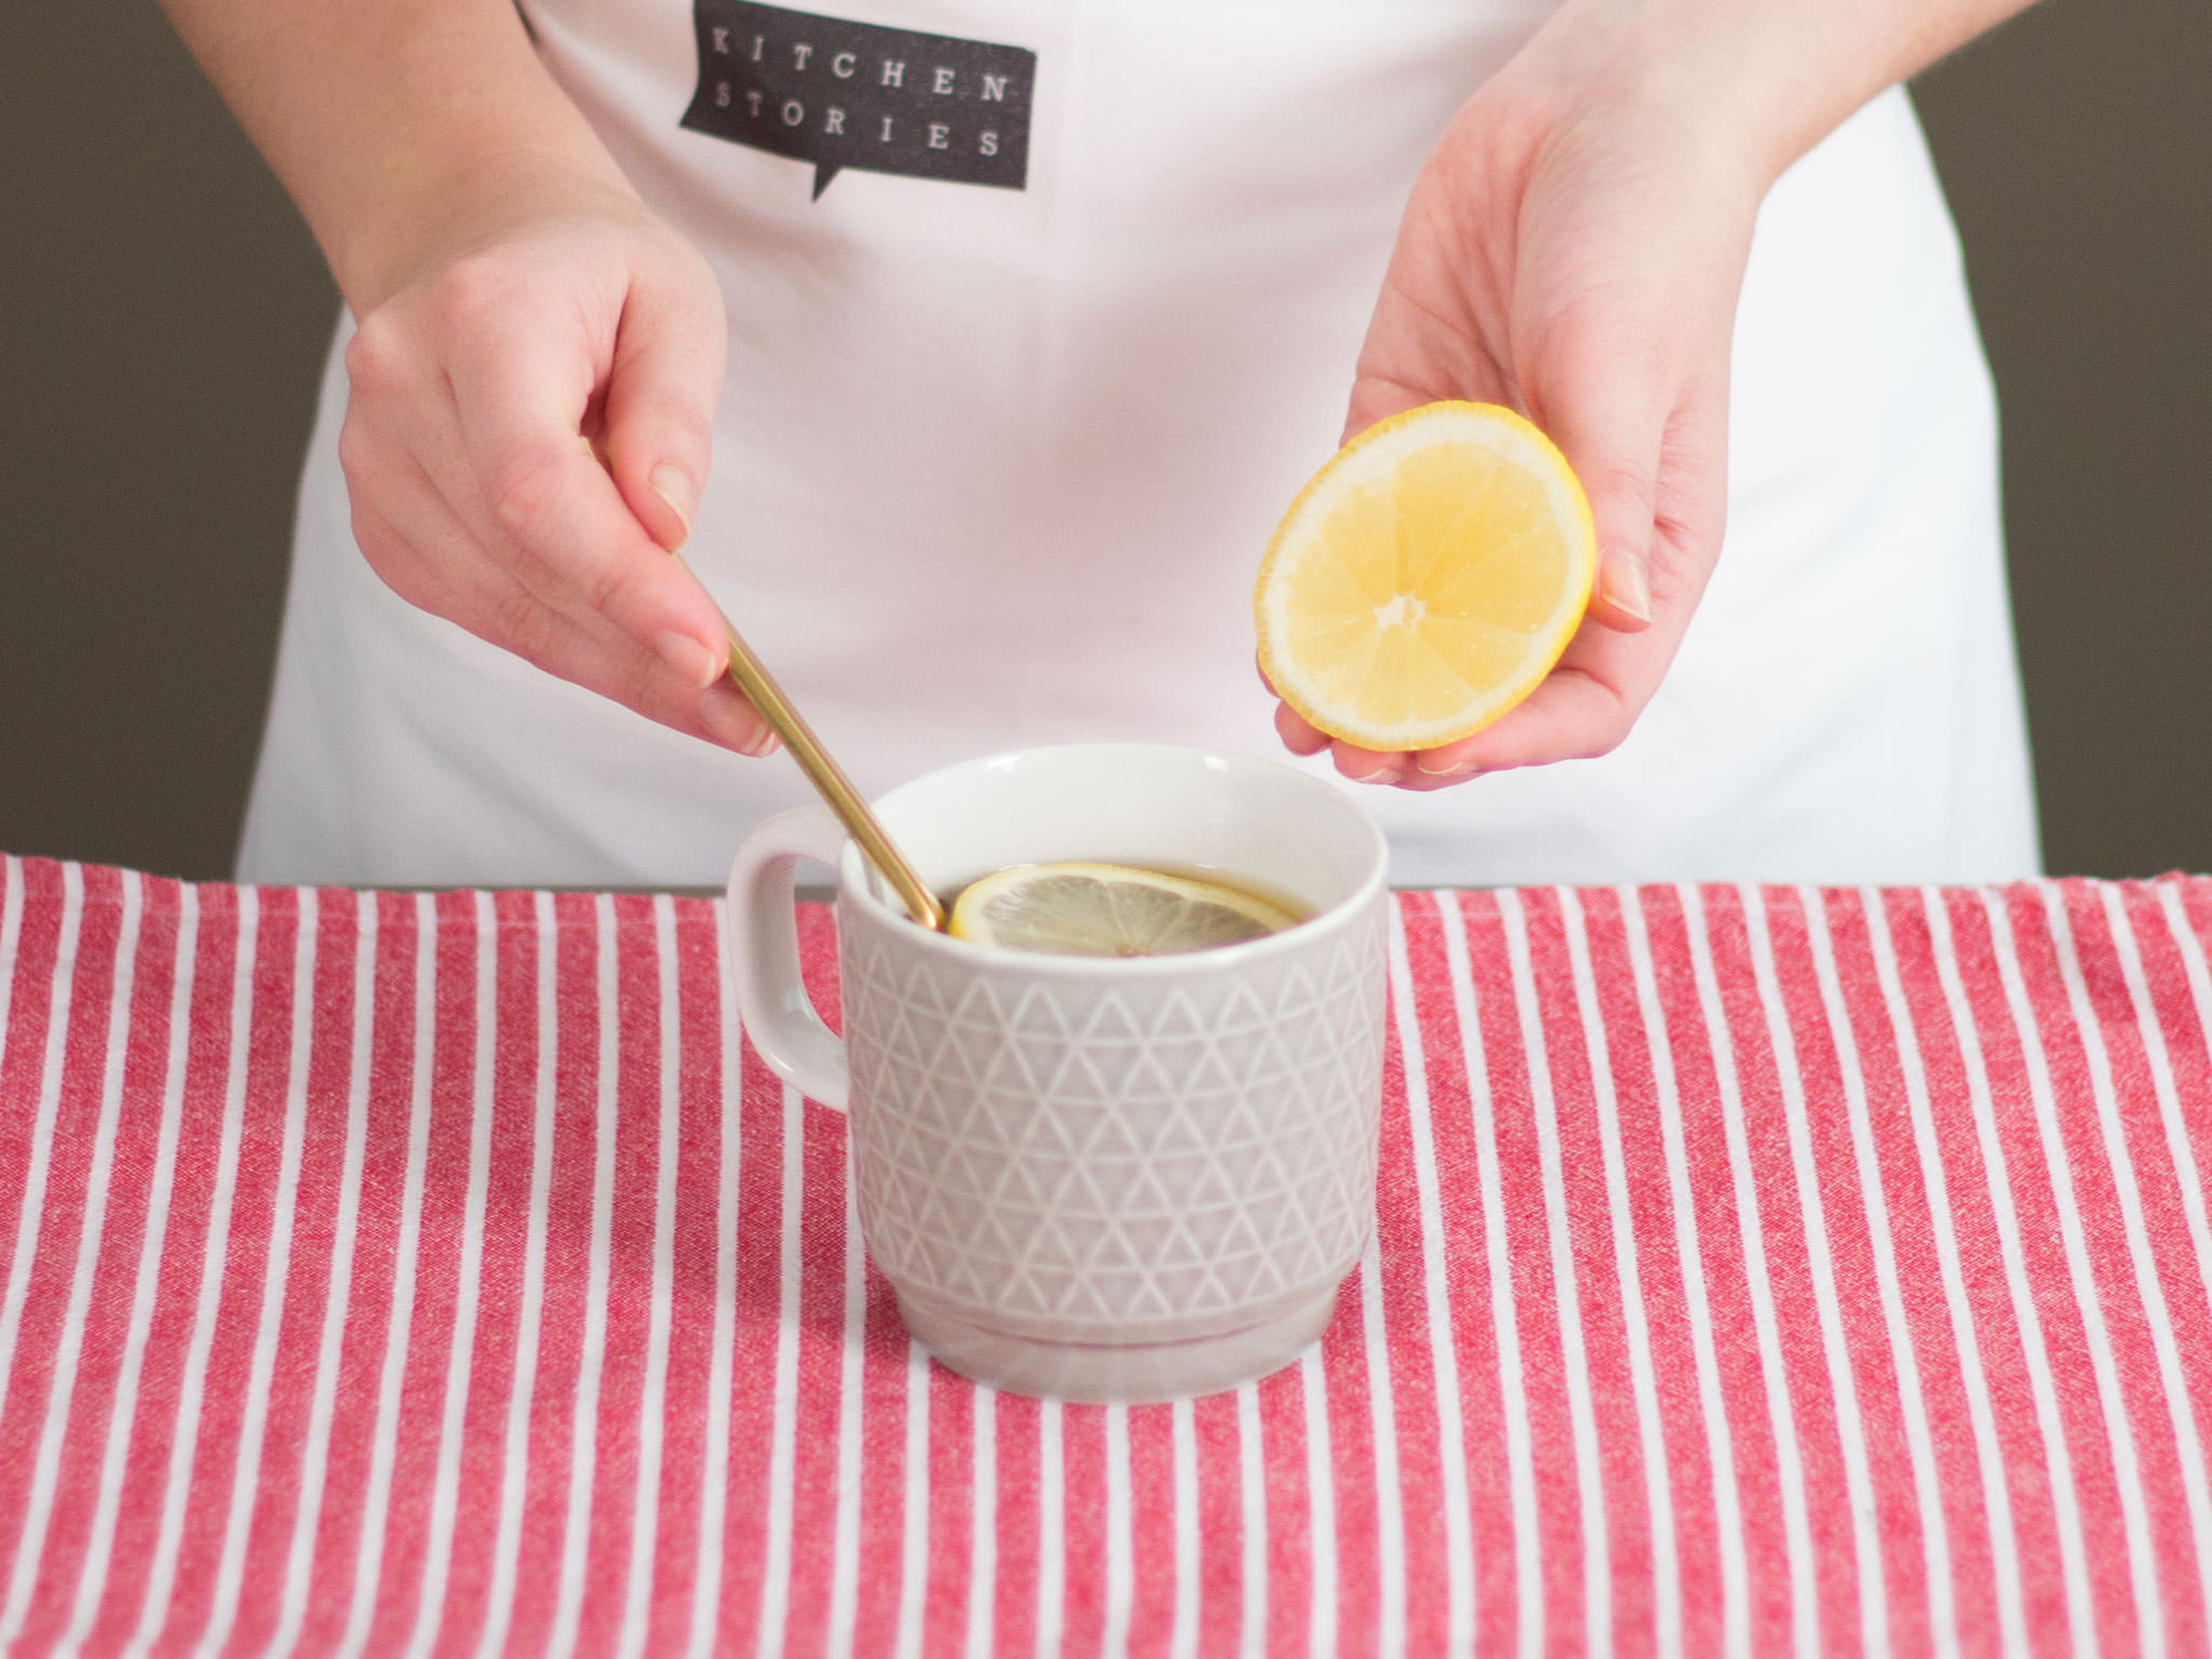 Add brandy and lemon juice to mug. Lightly stir. Enjoy!